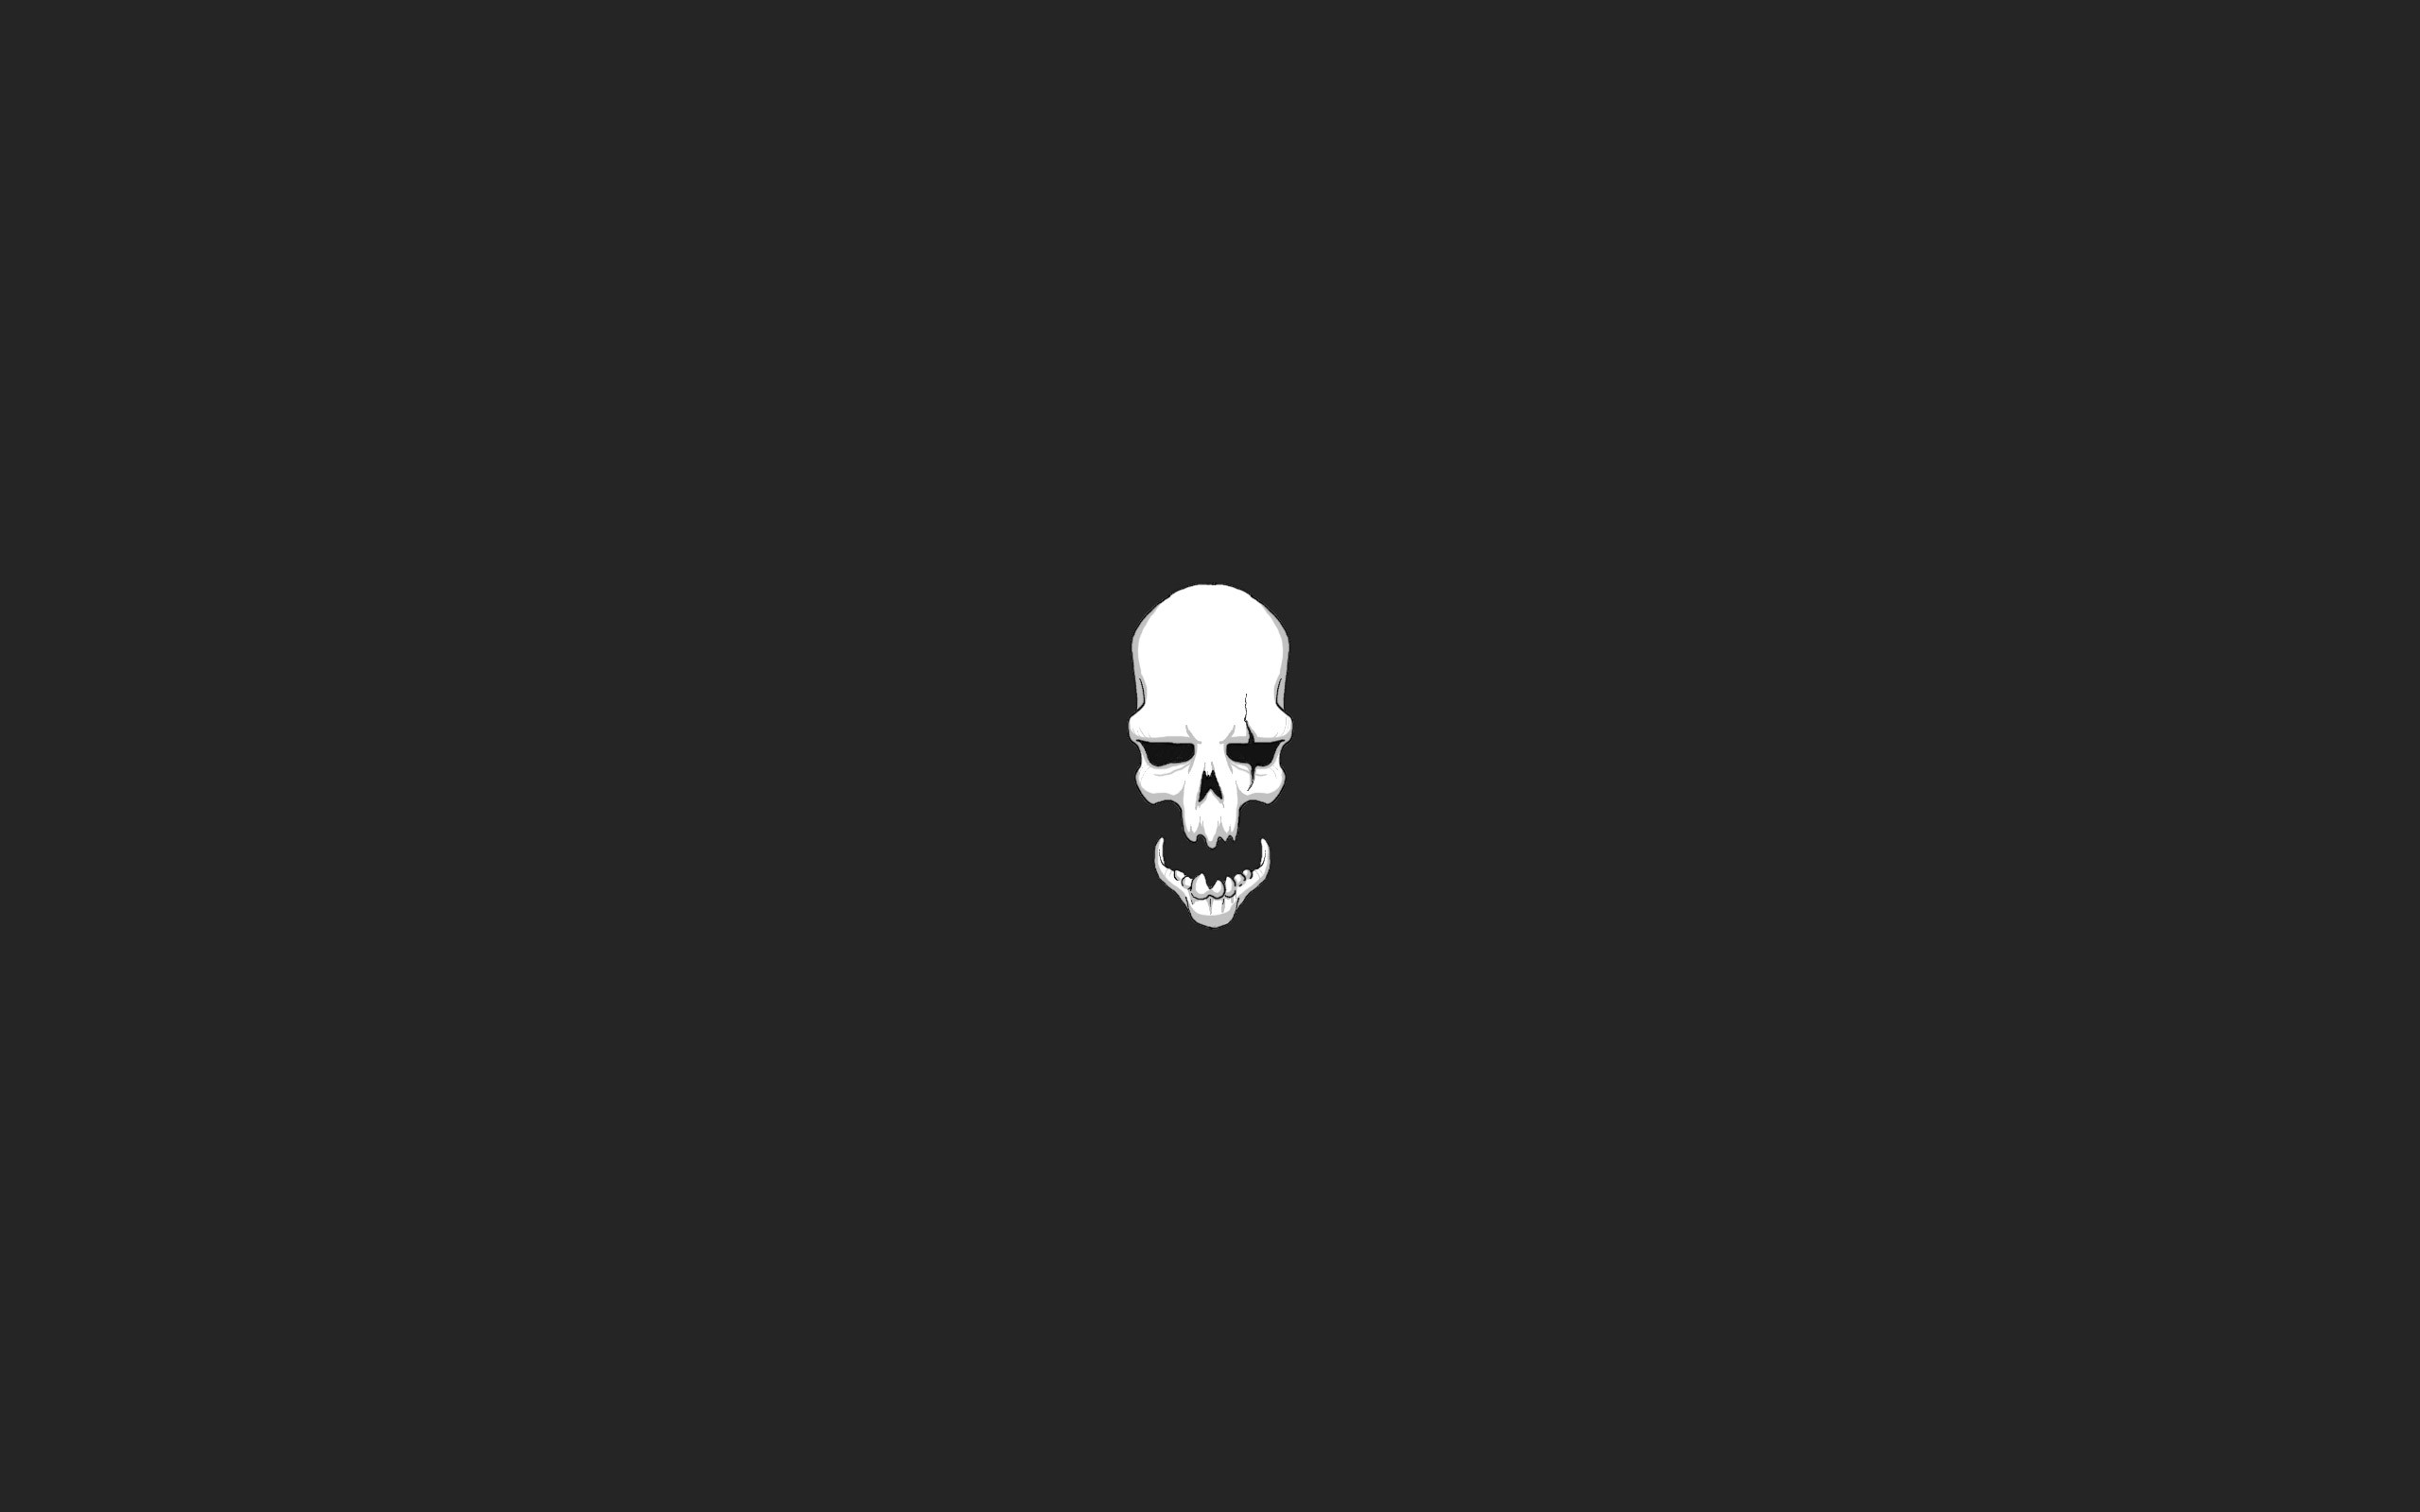 General 2560x1600 skull dark metal riots logo monochrome minimalism simple background black background artwork